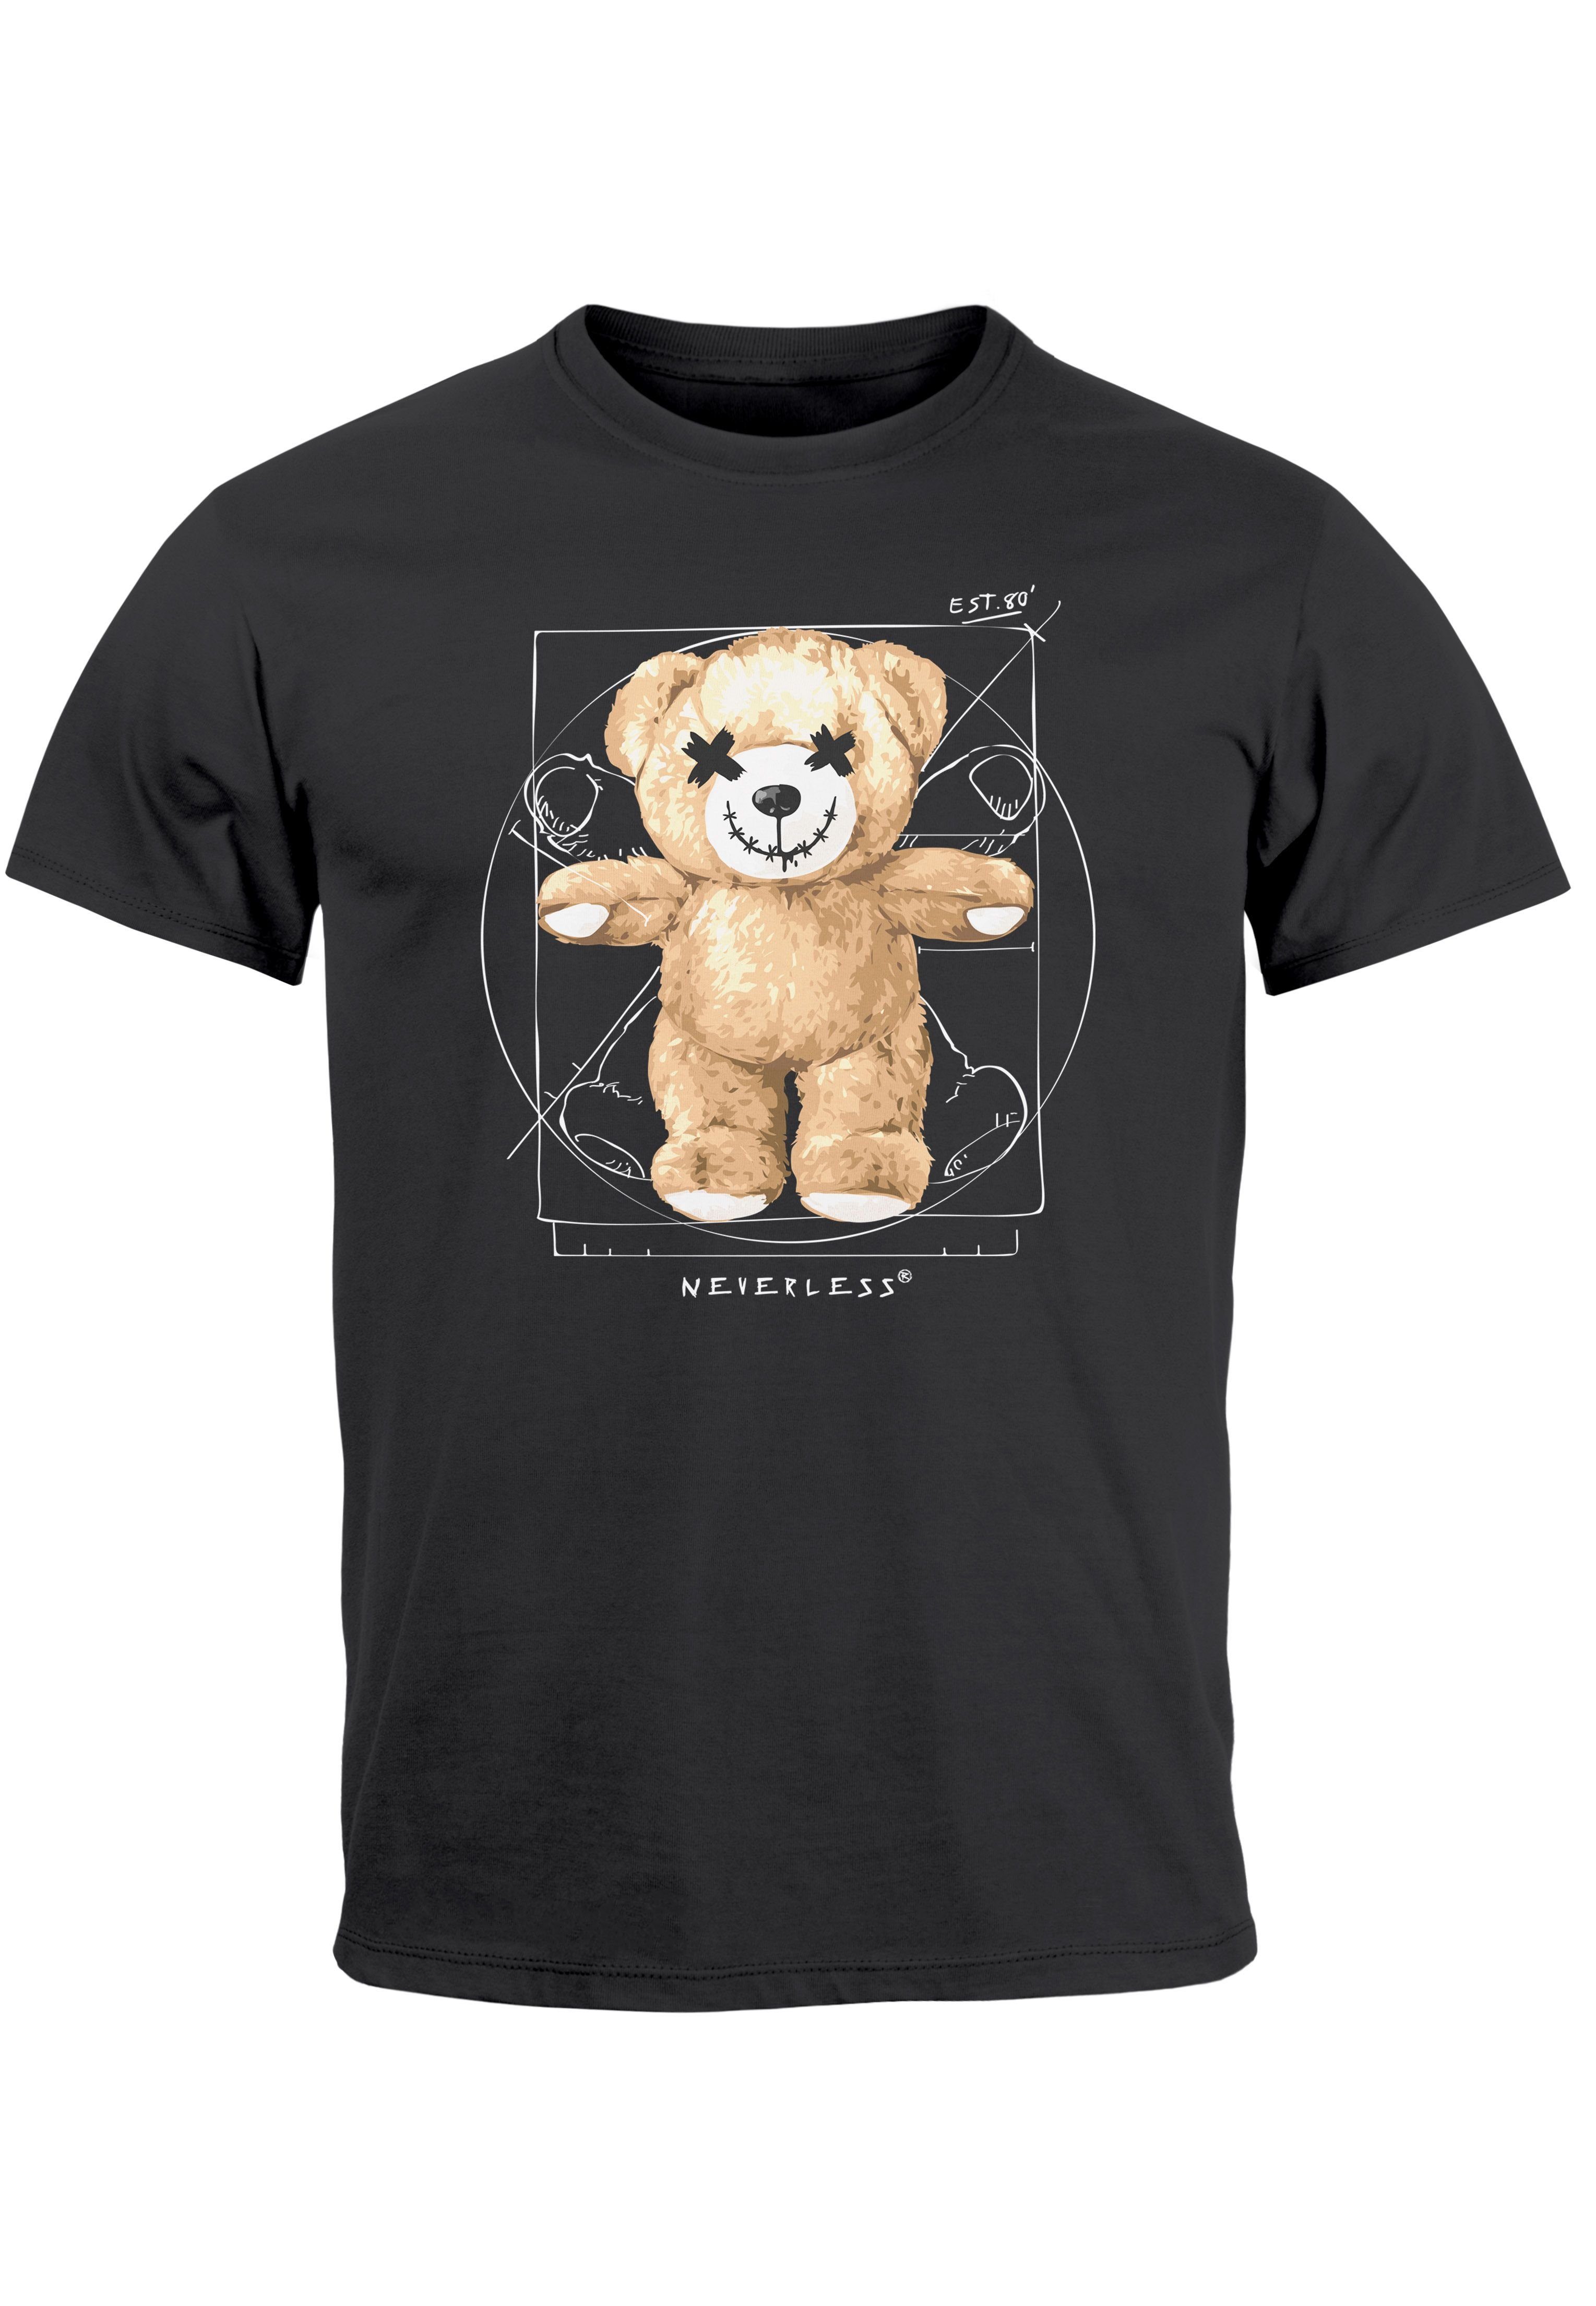 Fashion Streetstyl Print-Shirt Print Parodie T-Shirt Bär DaVinci Teddy Print Herren mit Meme dunkelgrau Neverless